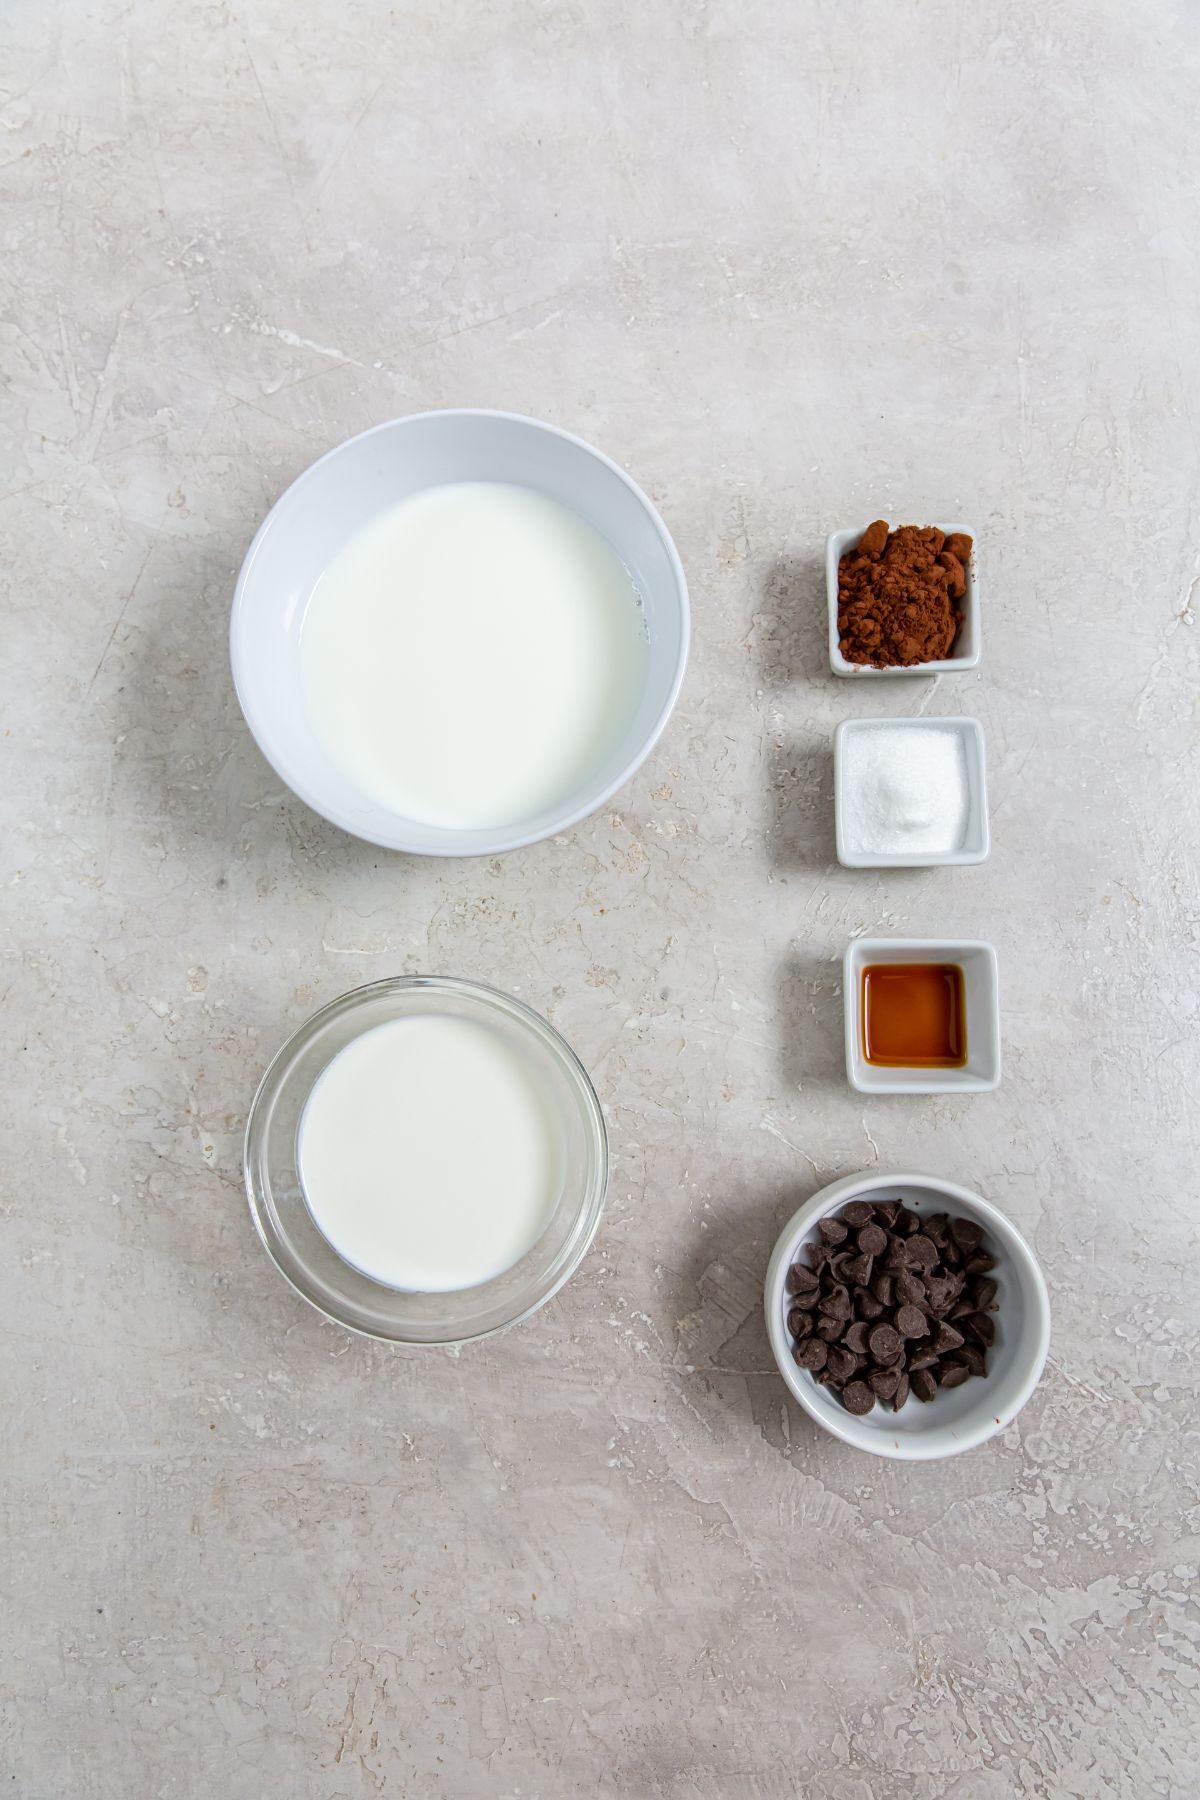 ingredients to make chocolate chocolate chip ice cream